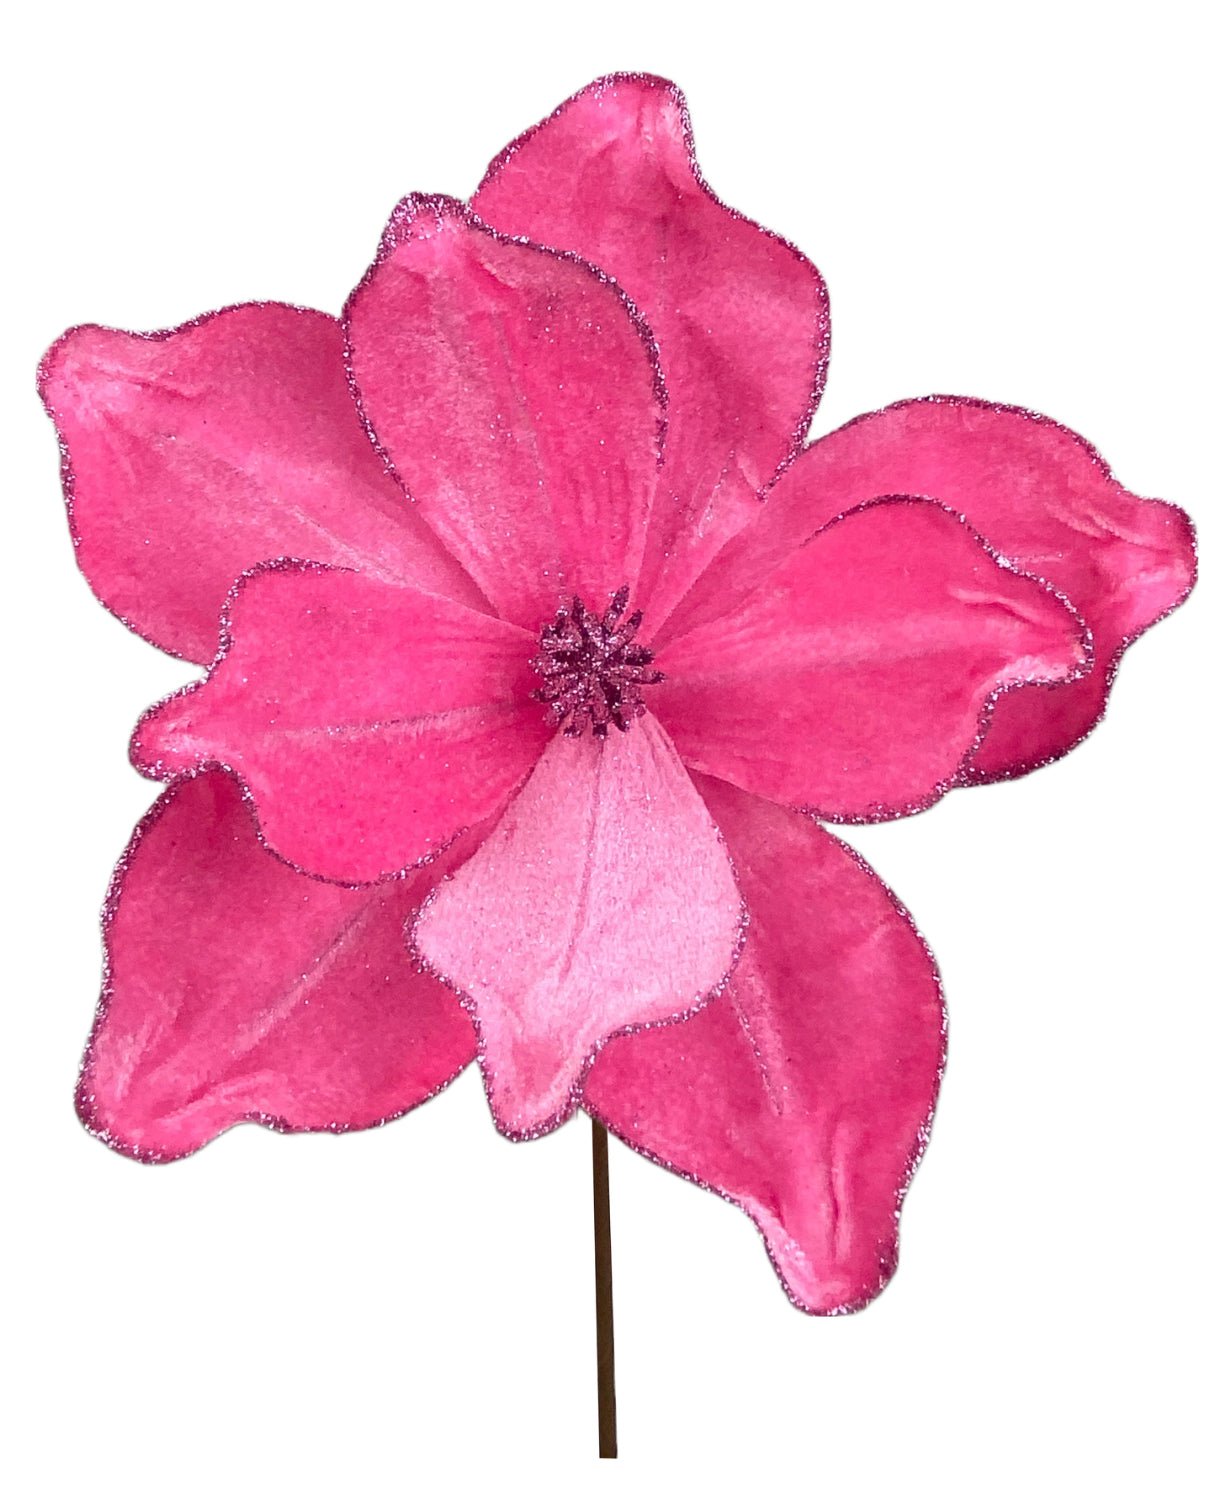 Velvet magnolia pick - pink - Greenery Market85729PK